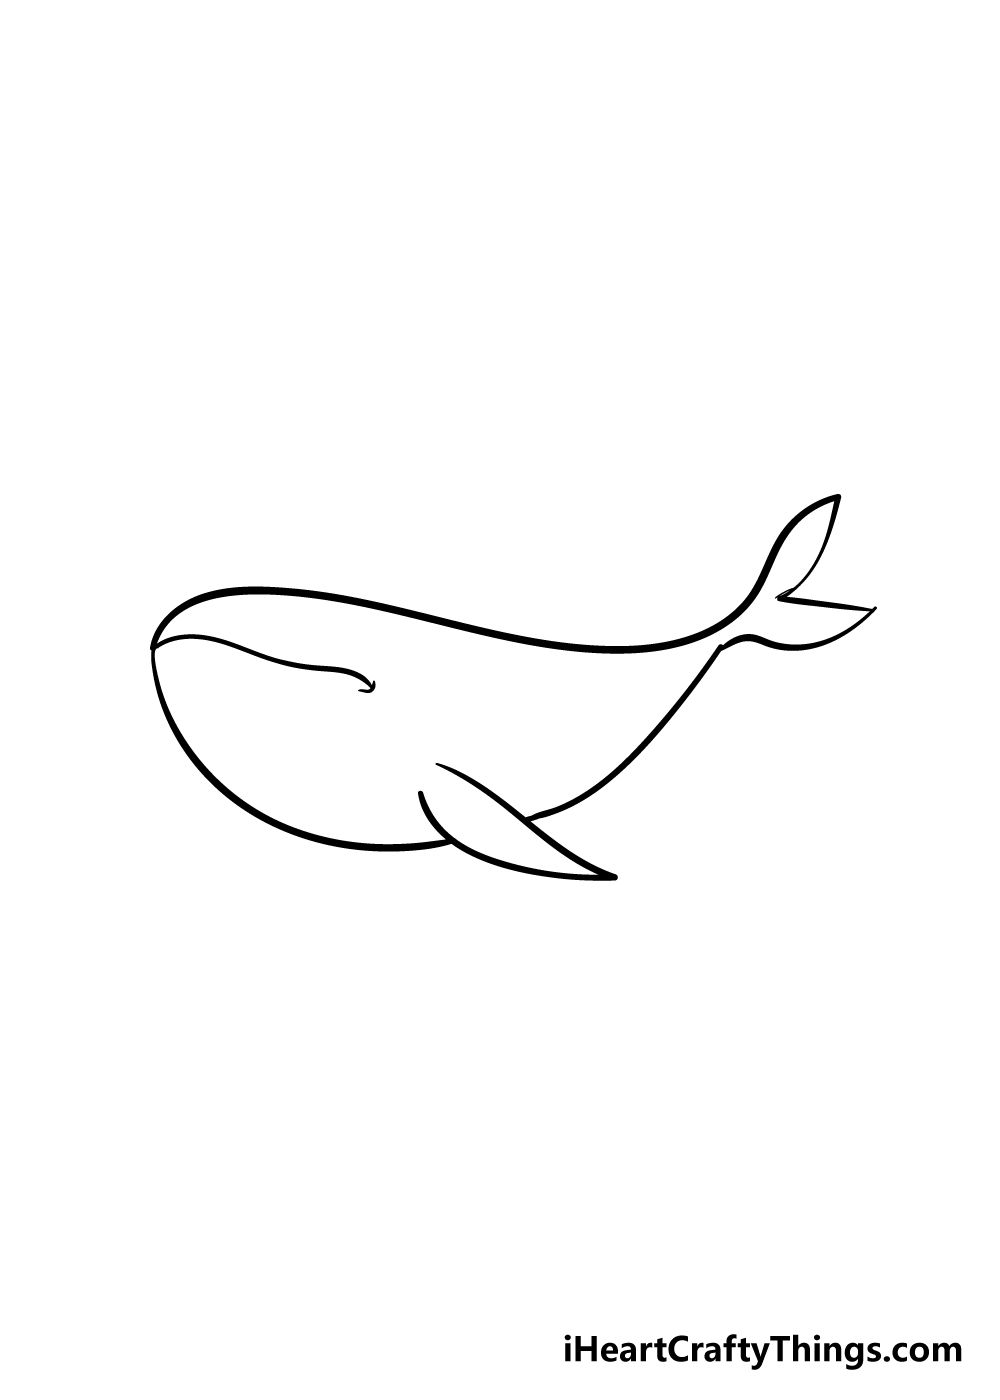 vẽ cá voi bước 3